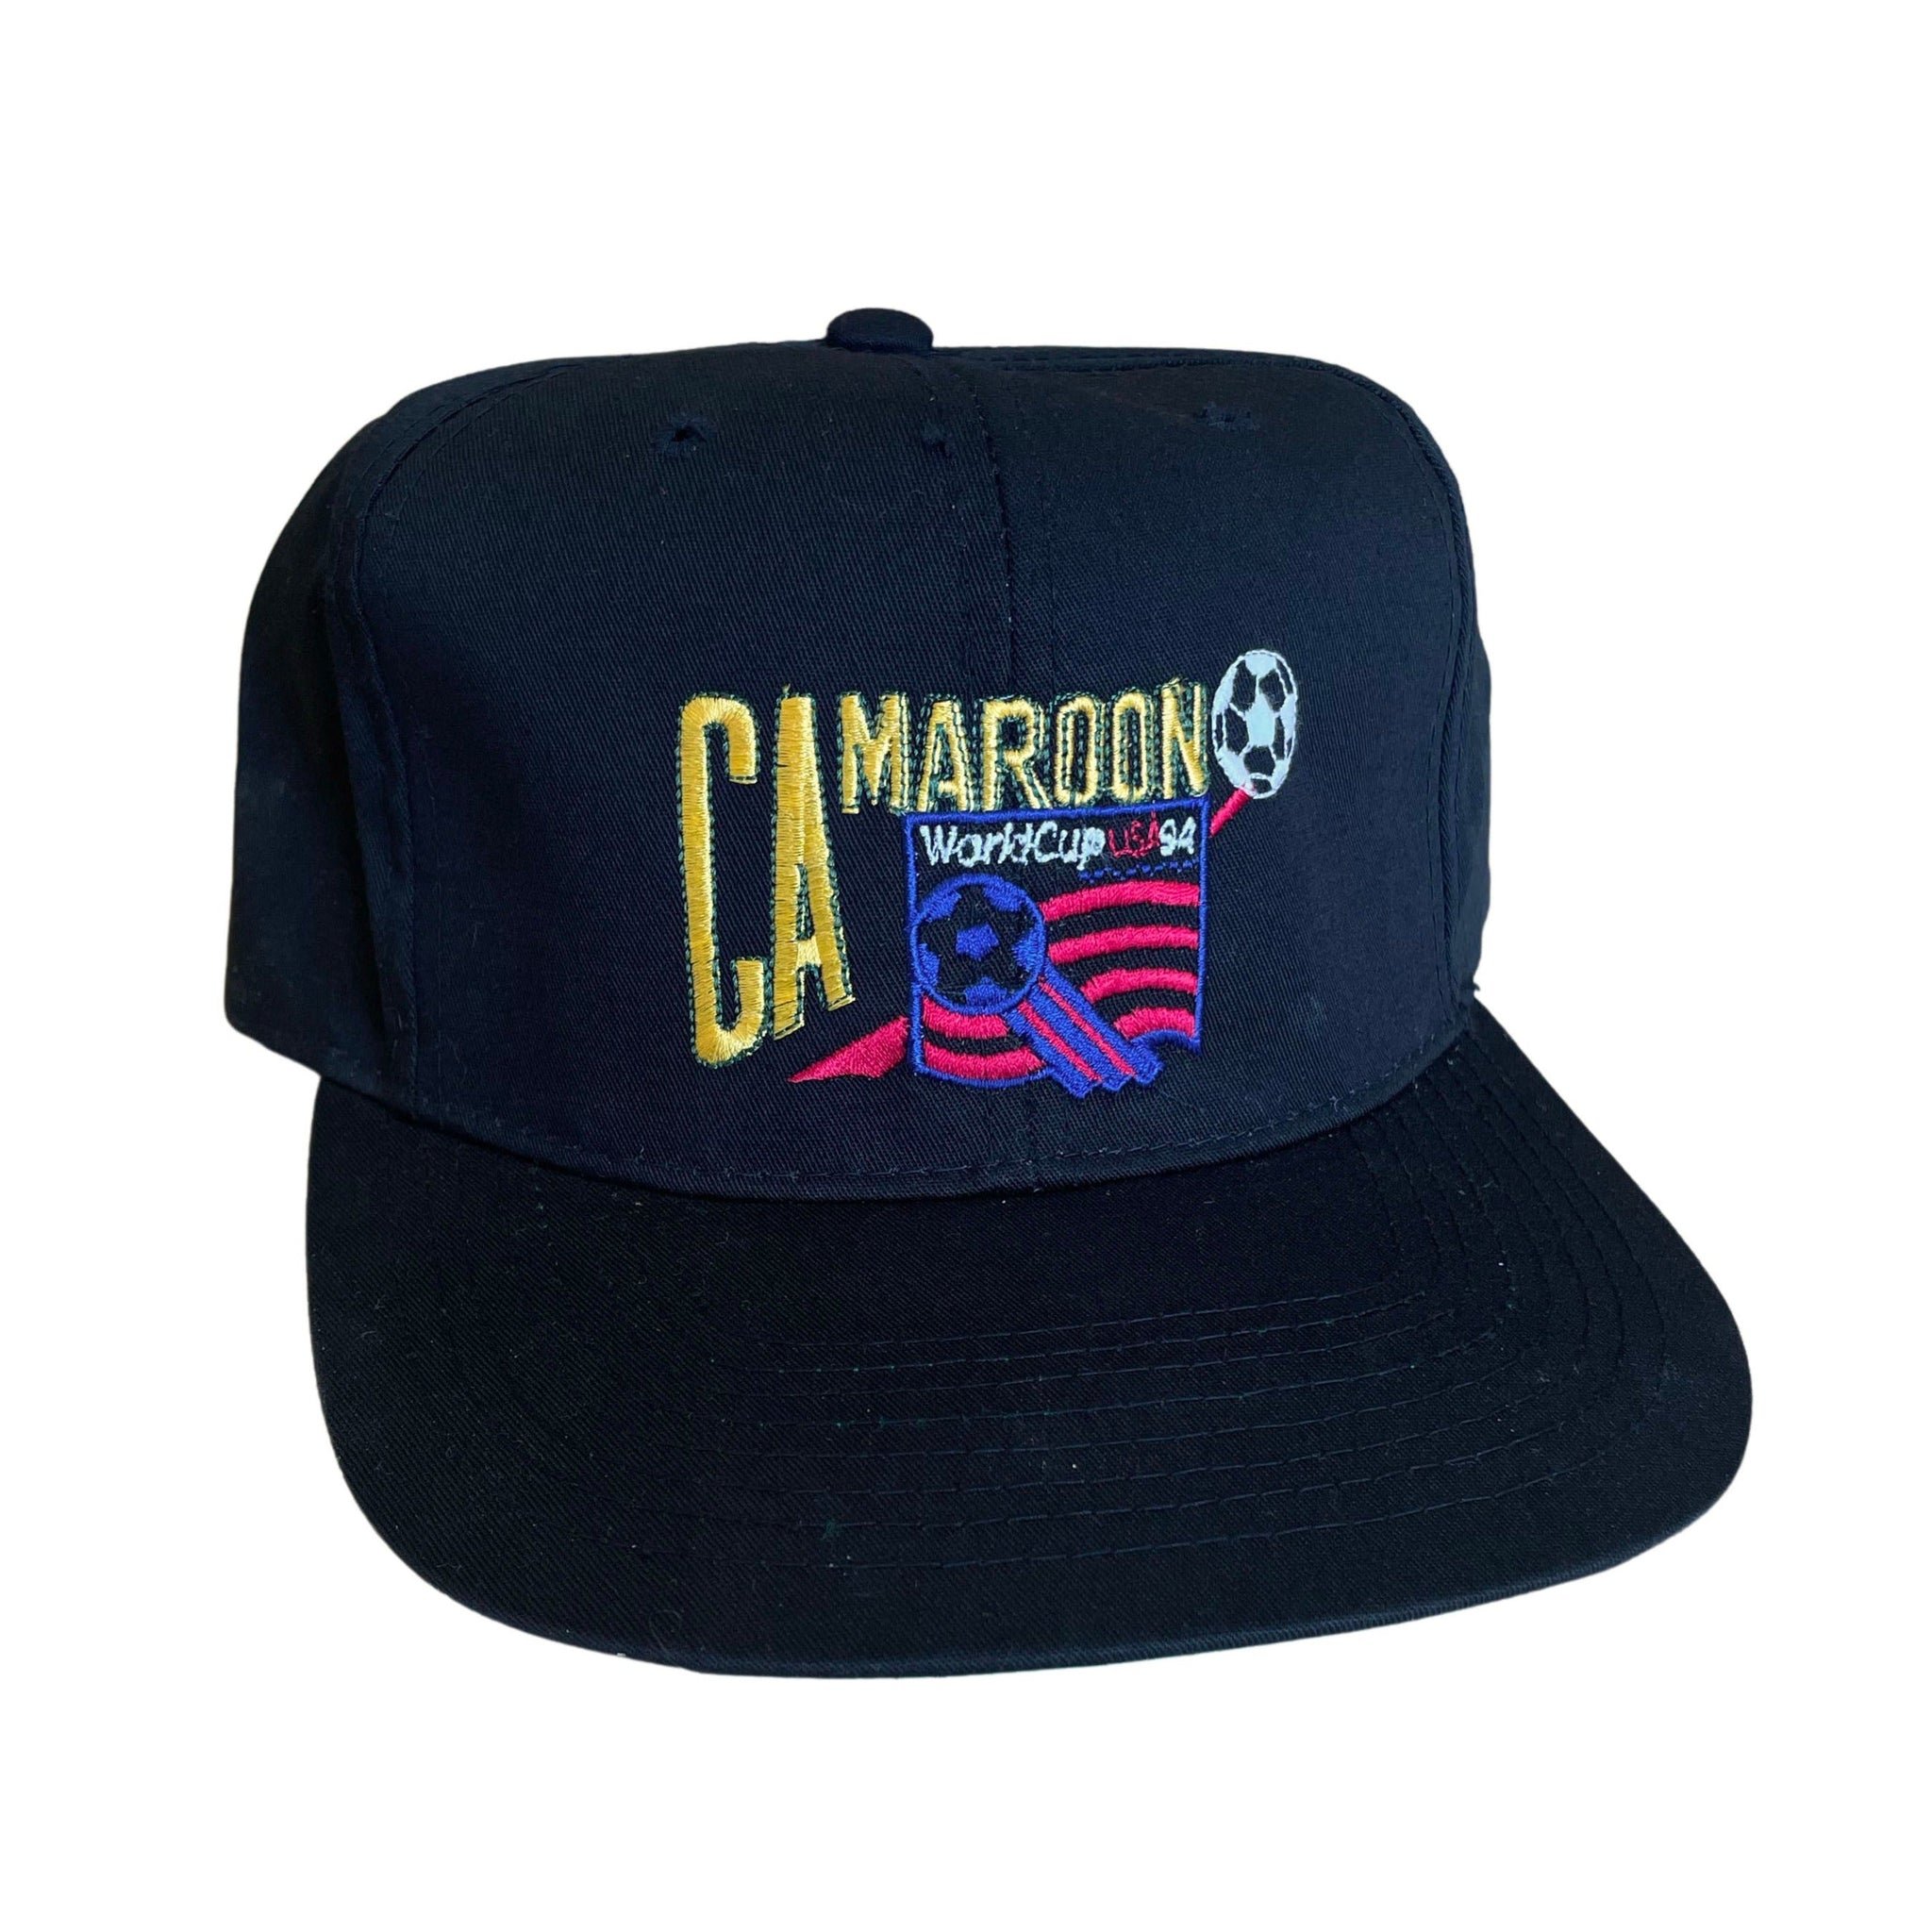 1994 World Cup "Camaroon" Hat - OS